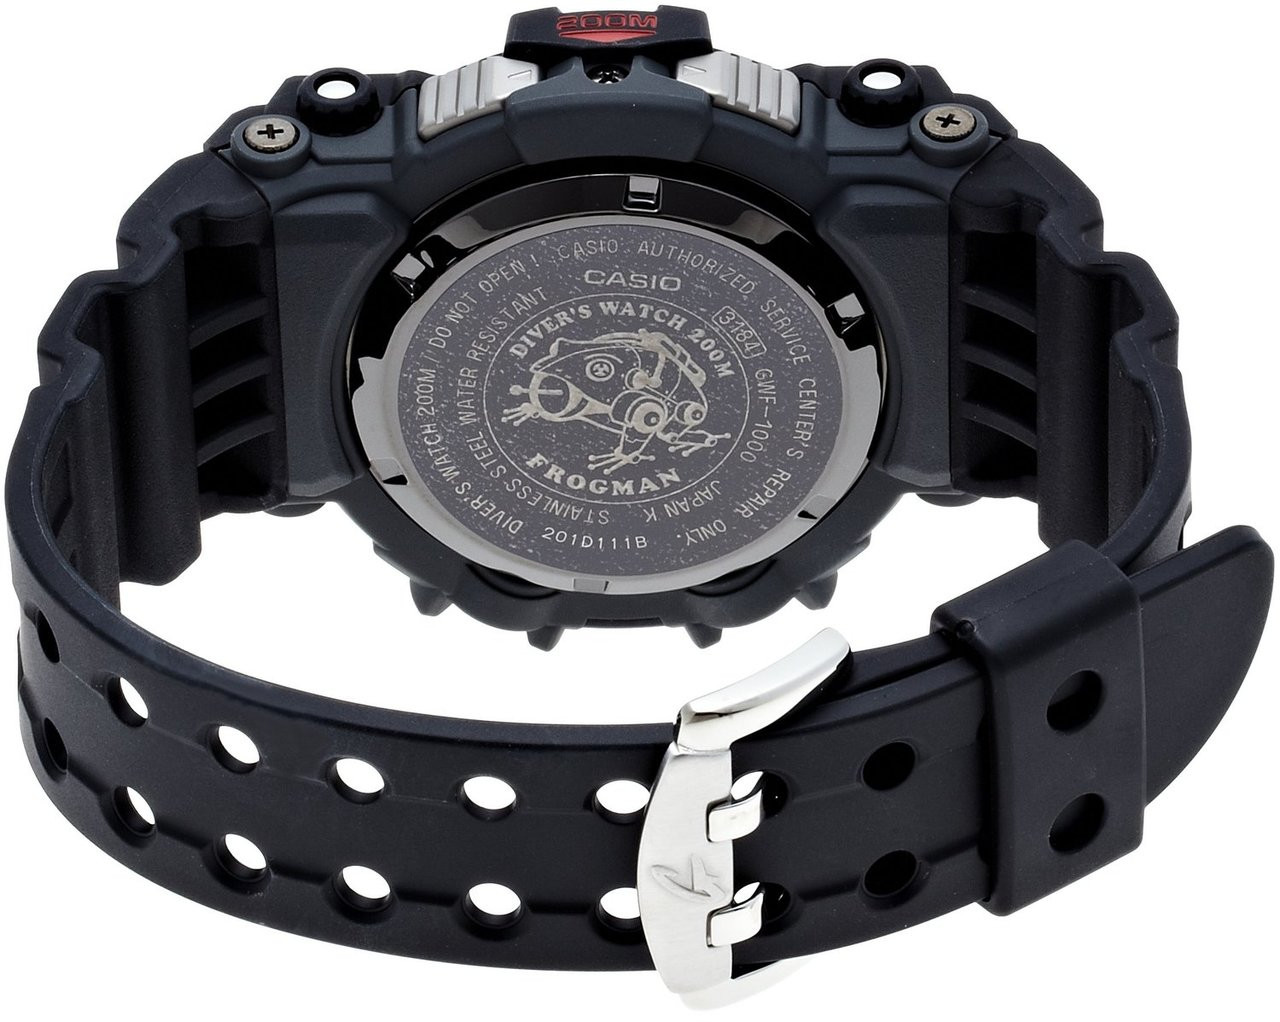 Casio G-Shock GWF-D1000-1ER Frogman Divers Watch